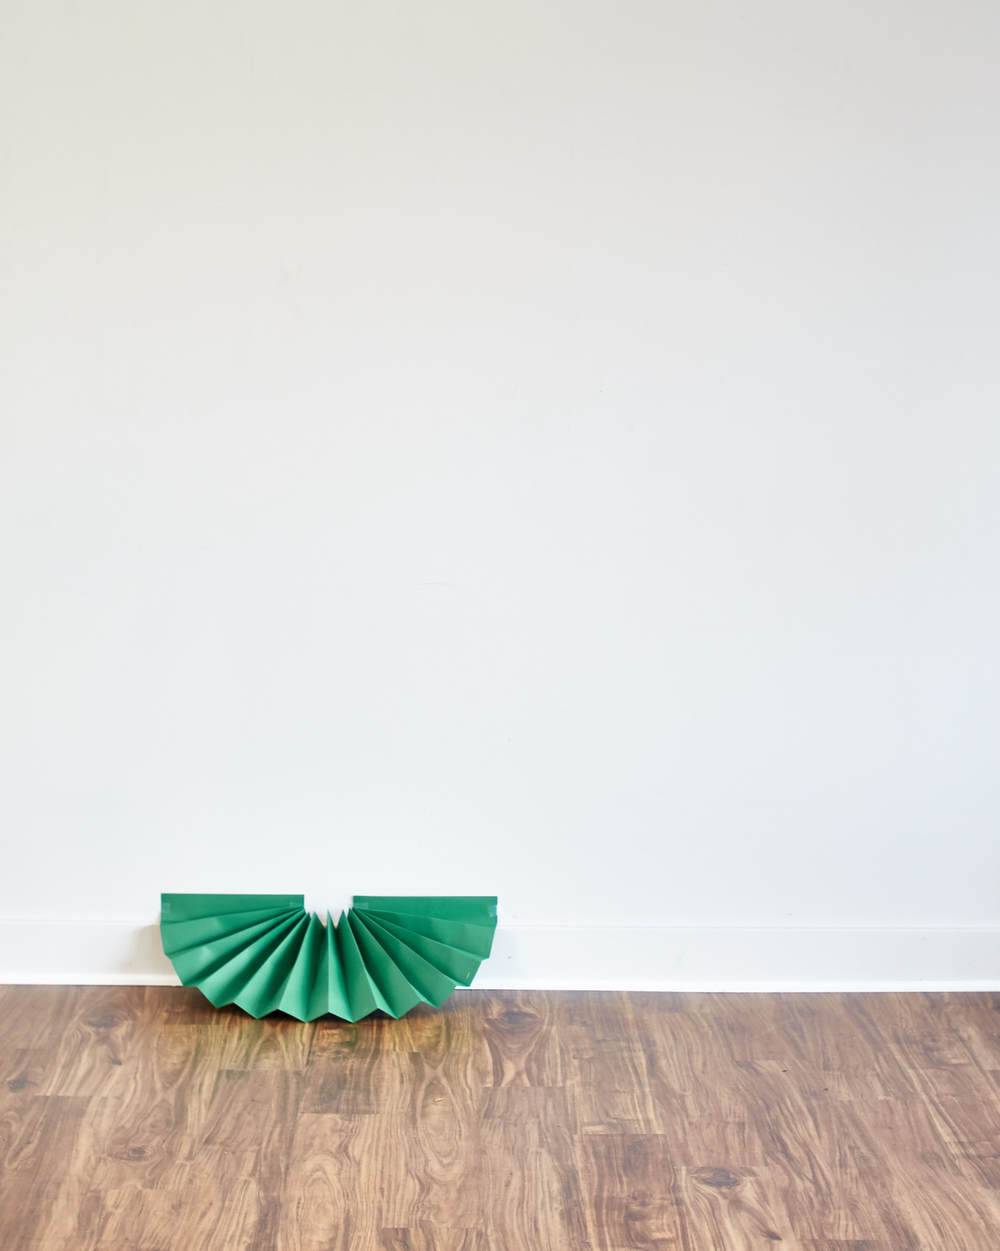 A green fan is sitting on the floor near a white wall.